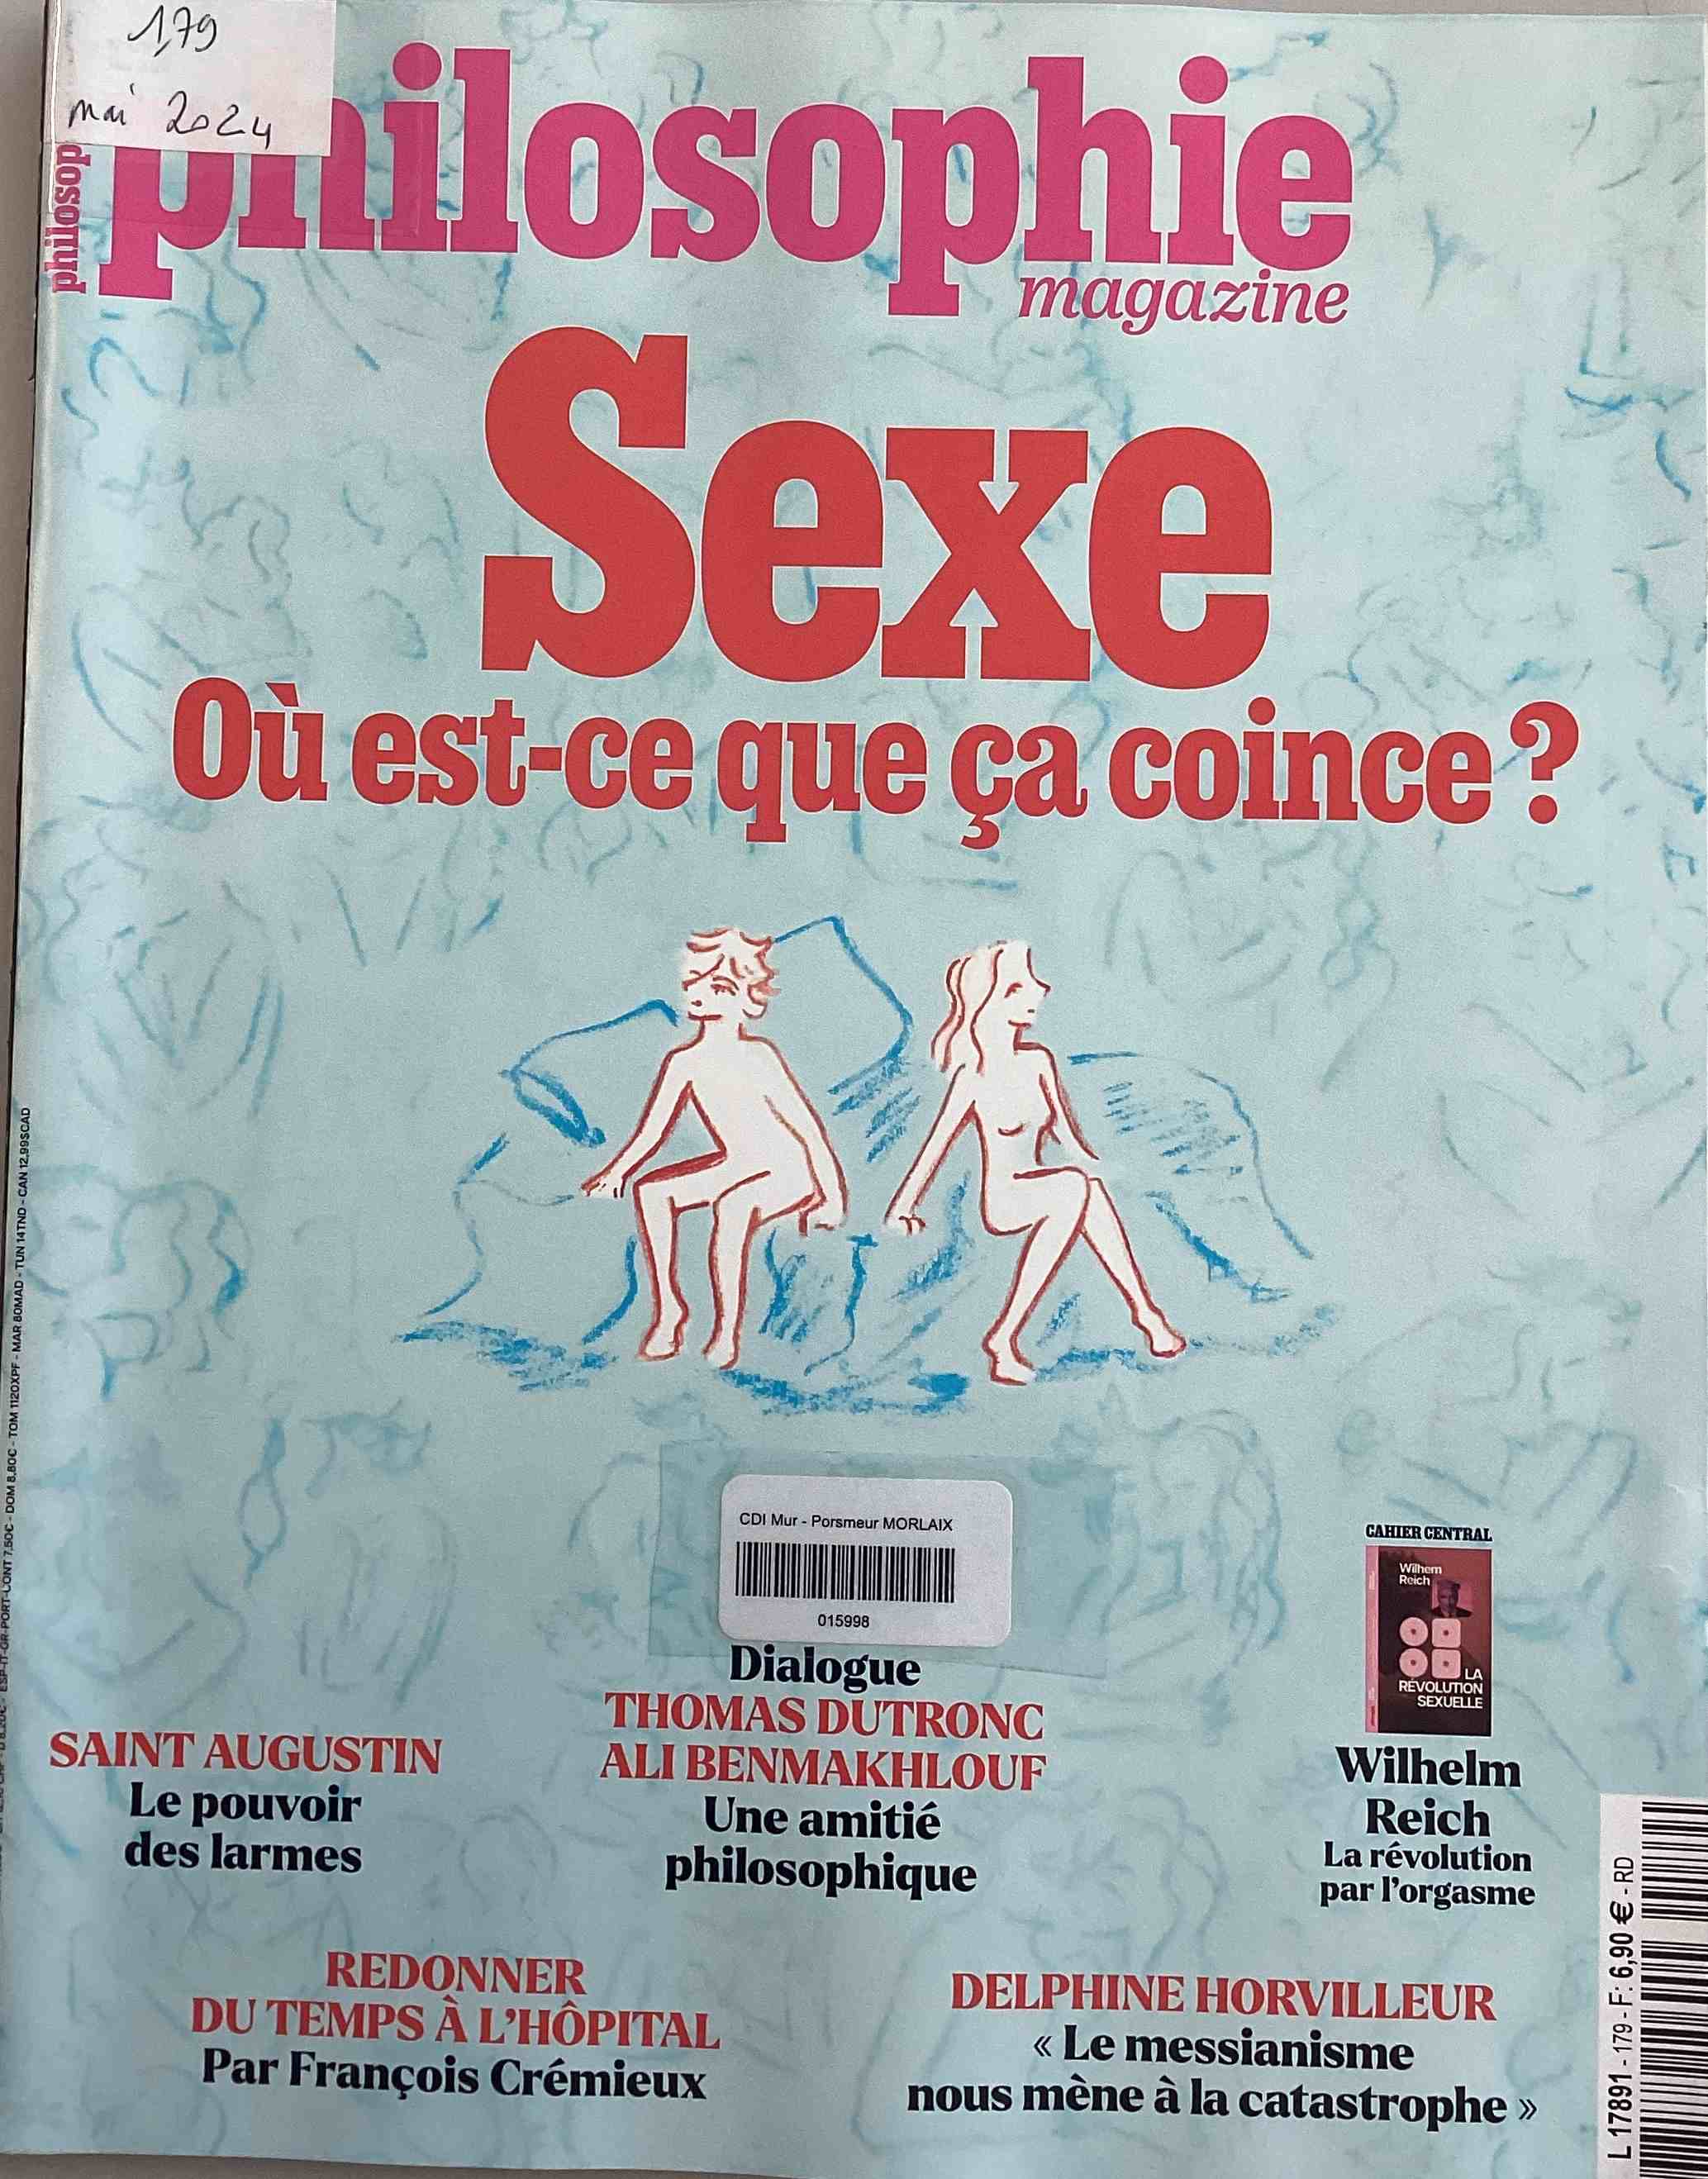 Philosophie magazine